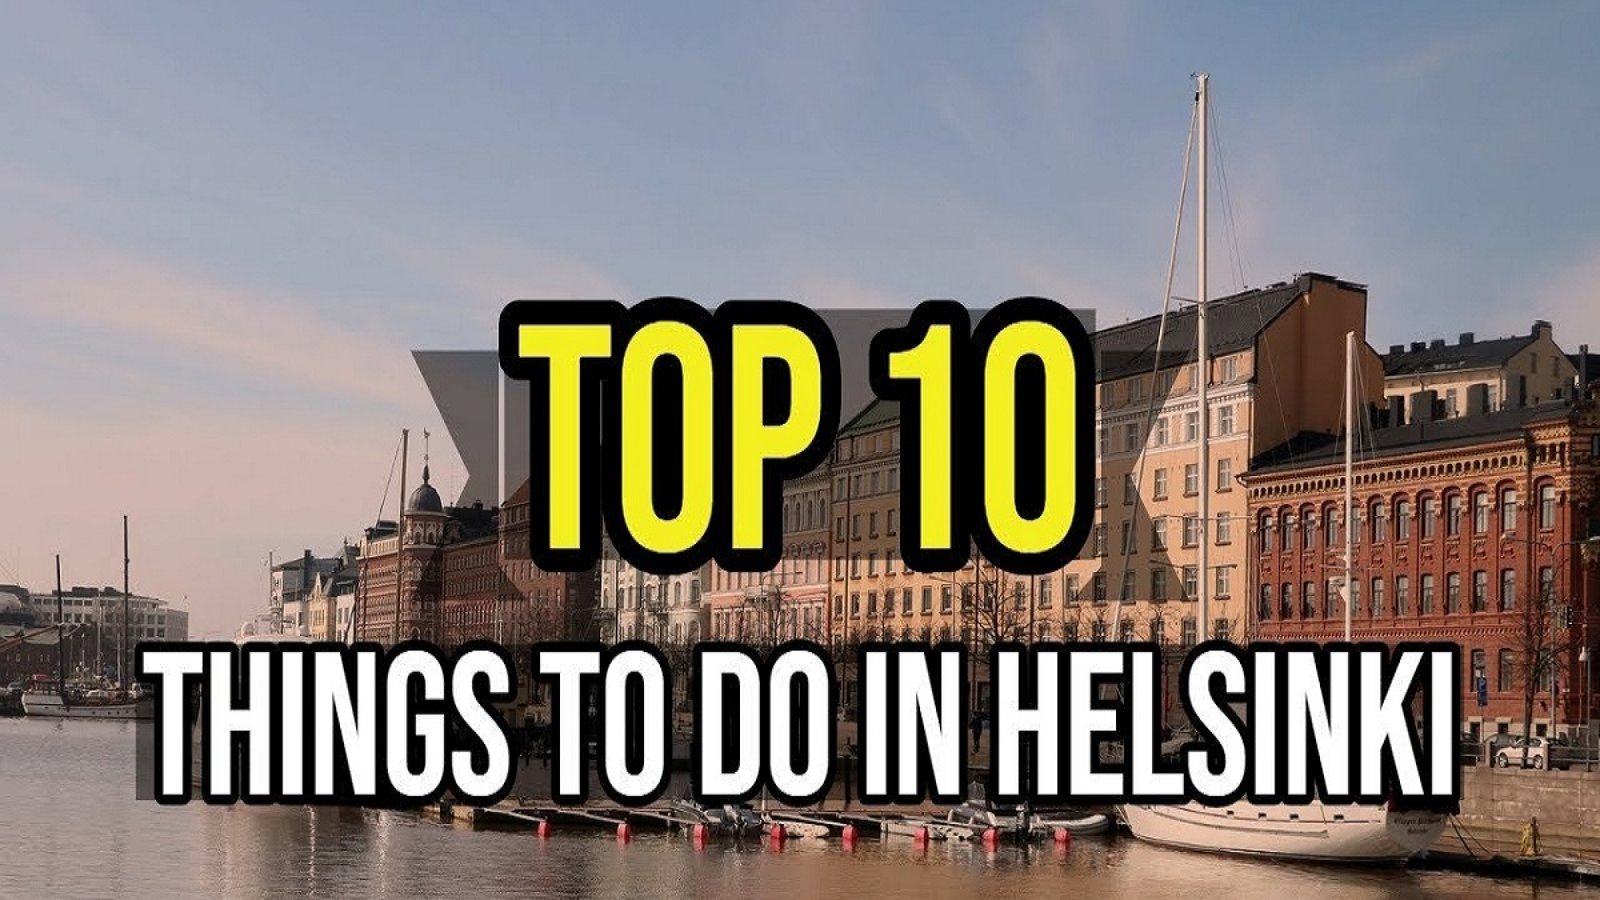 TOP 10 Things to Do in Helsinki